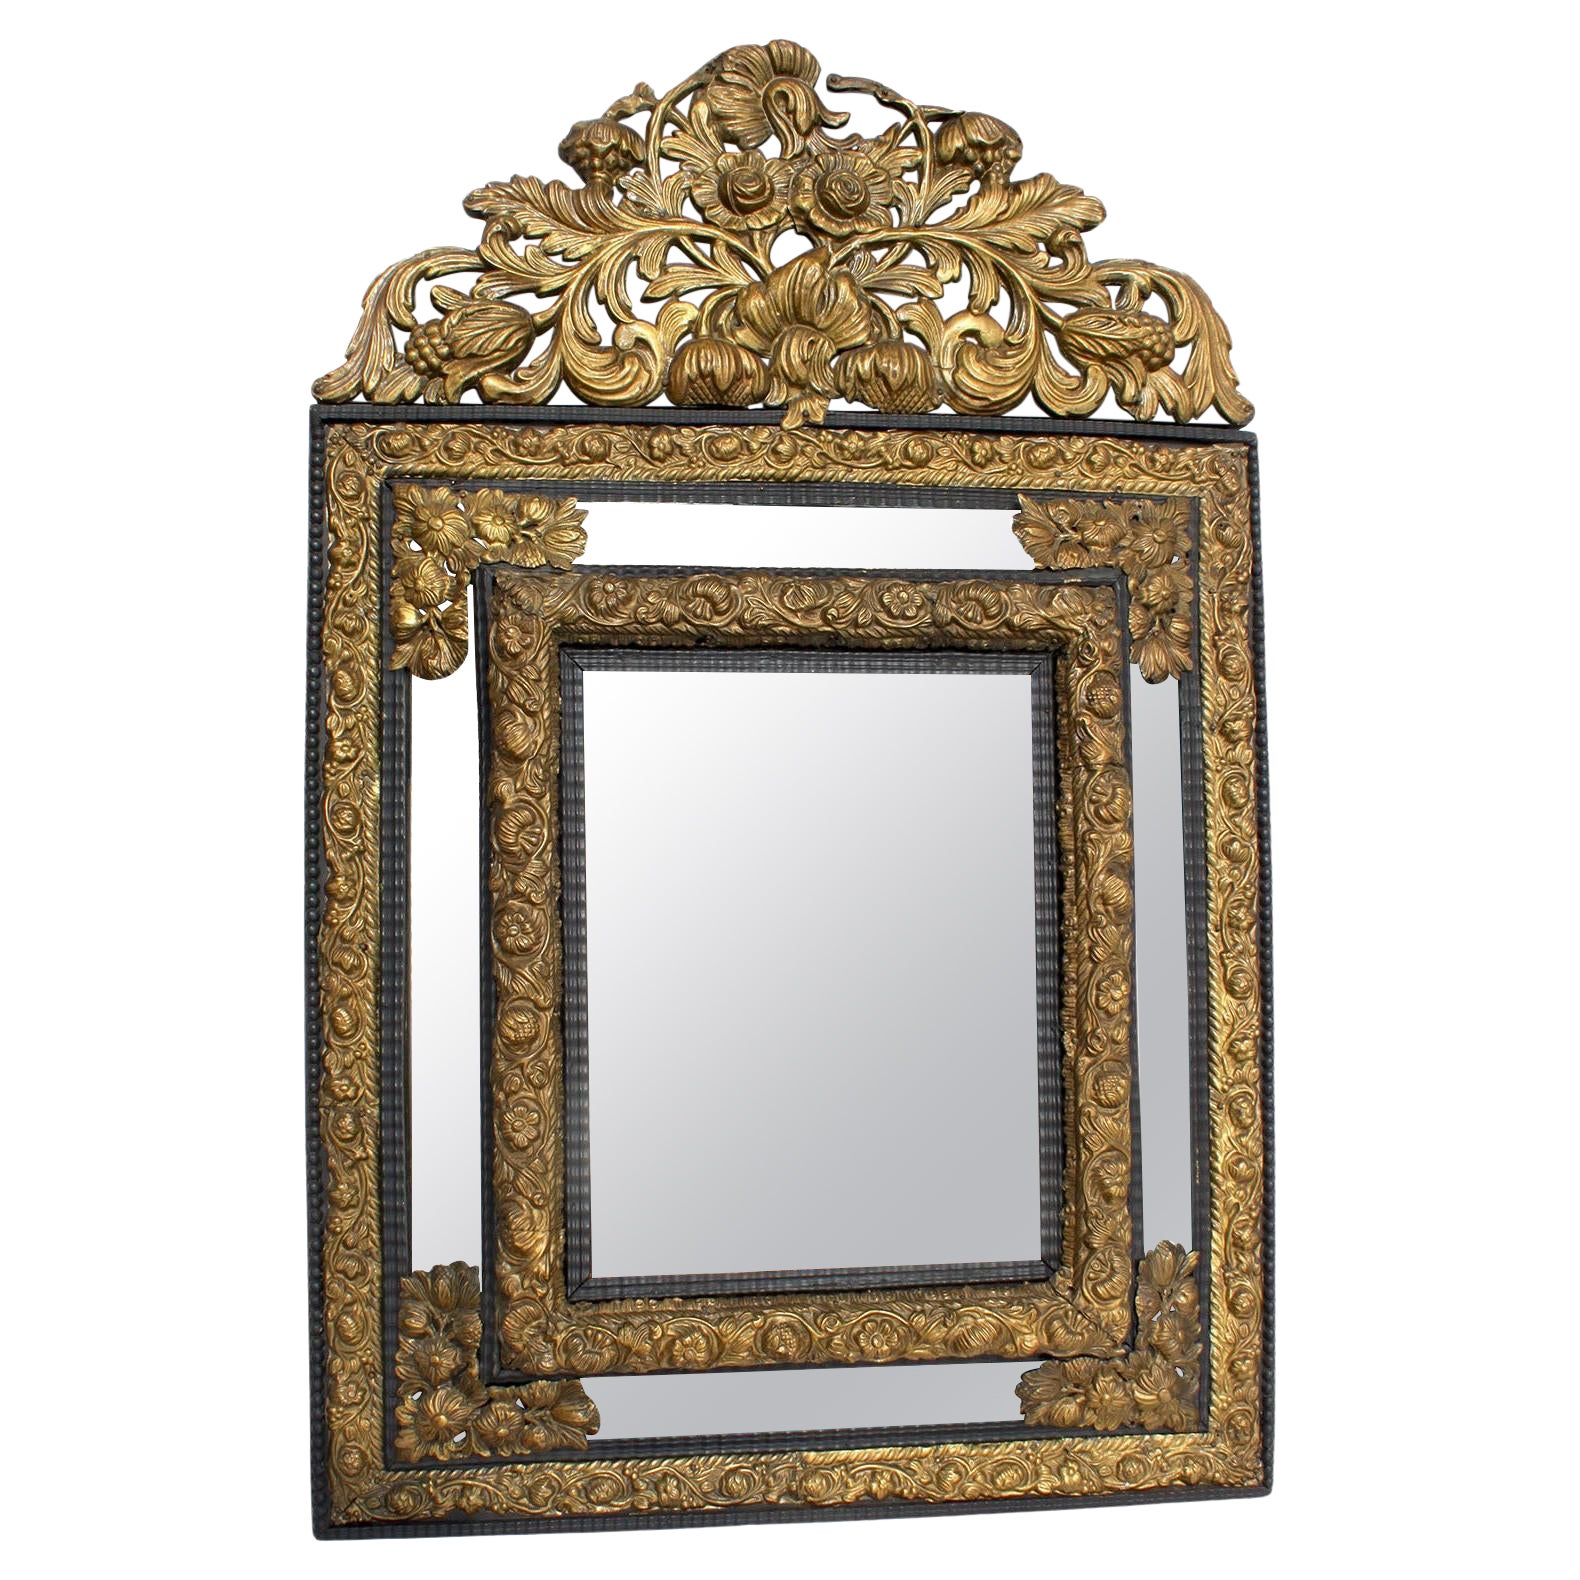 Französischer Spiegelrahmen im Barockstil, gehämmert, vergoldet, Messing, repoussiert, 19.